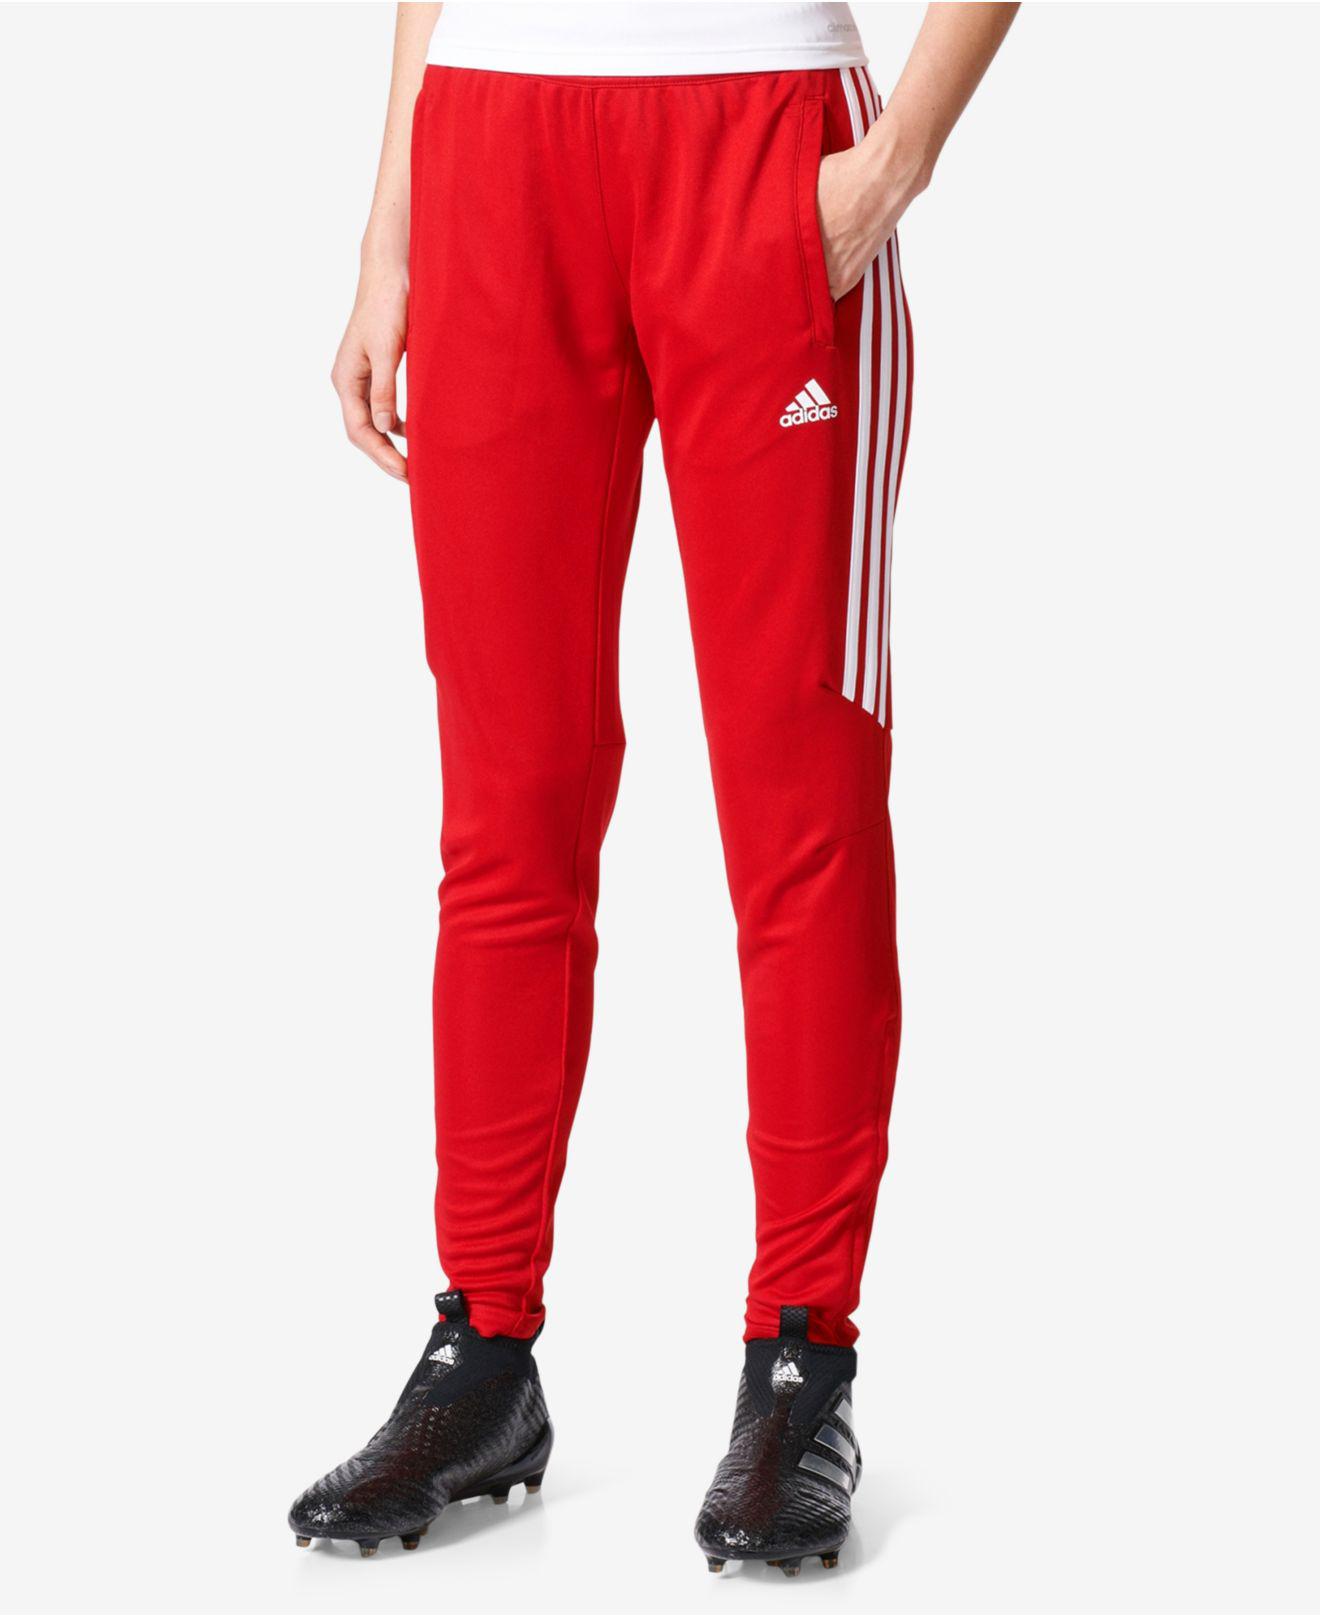 Red Adidas Climacool Pants Poland, SAVE 57% - mpgc.net